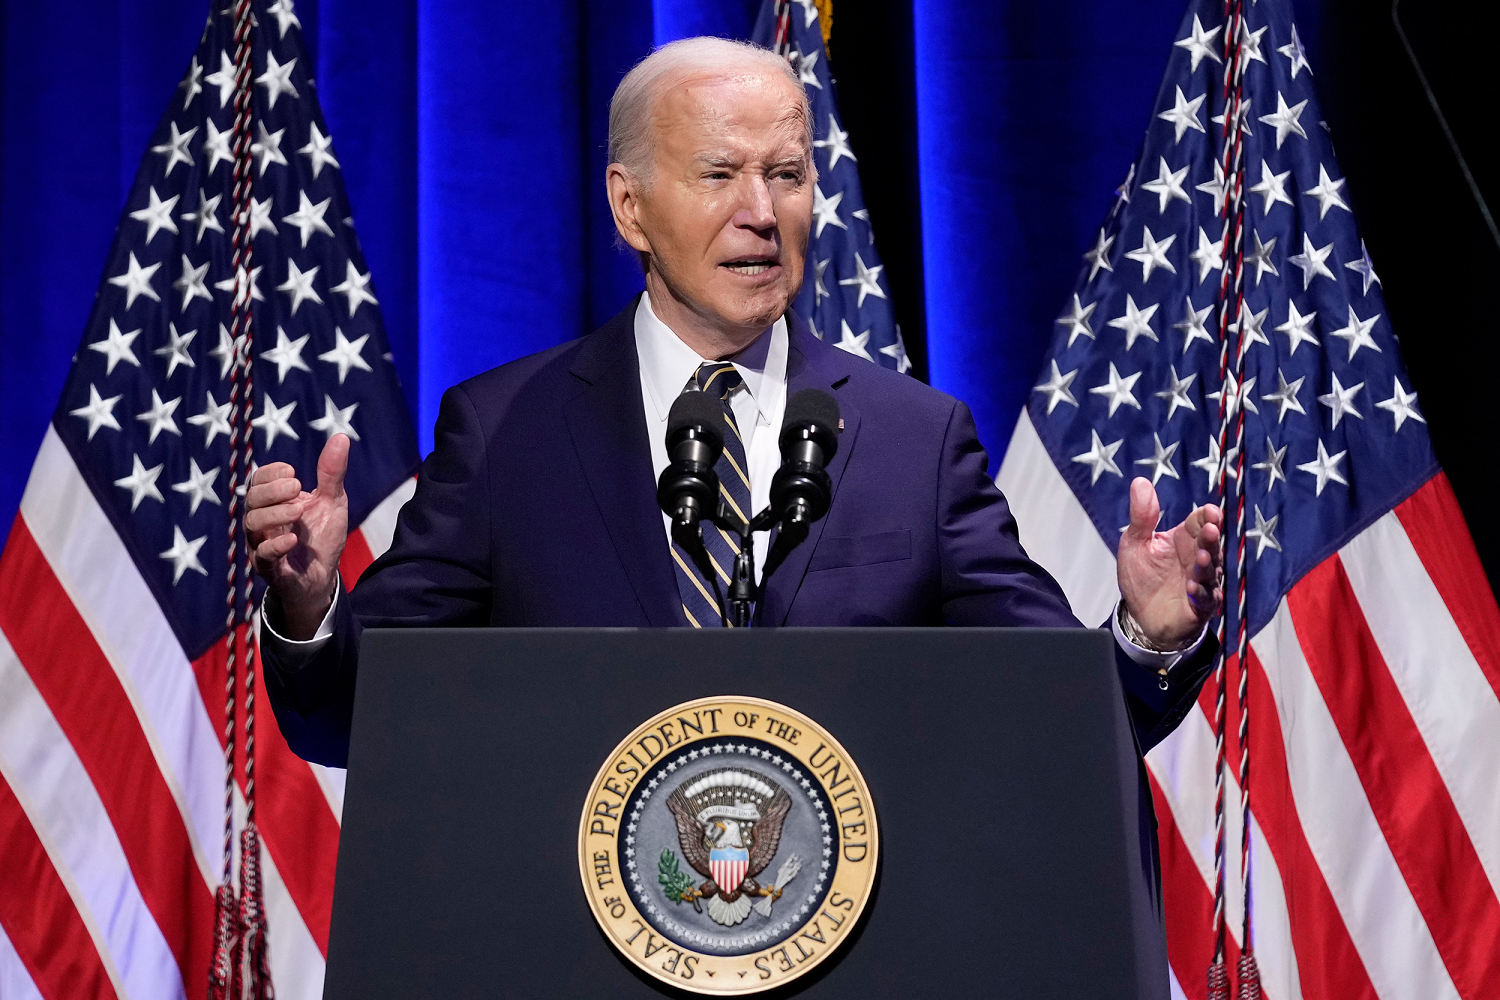 'No more games': Biden rejects additional debates against Trump